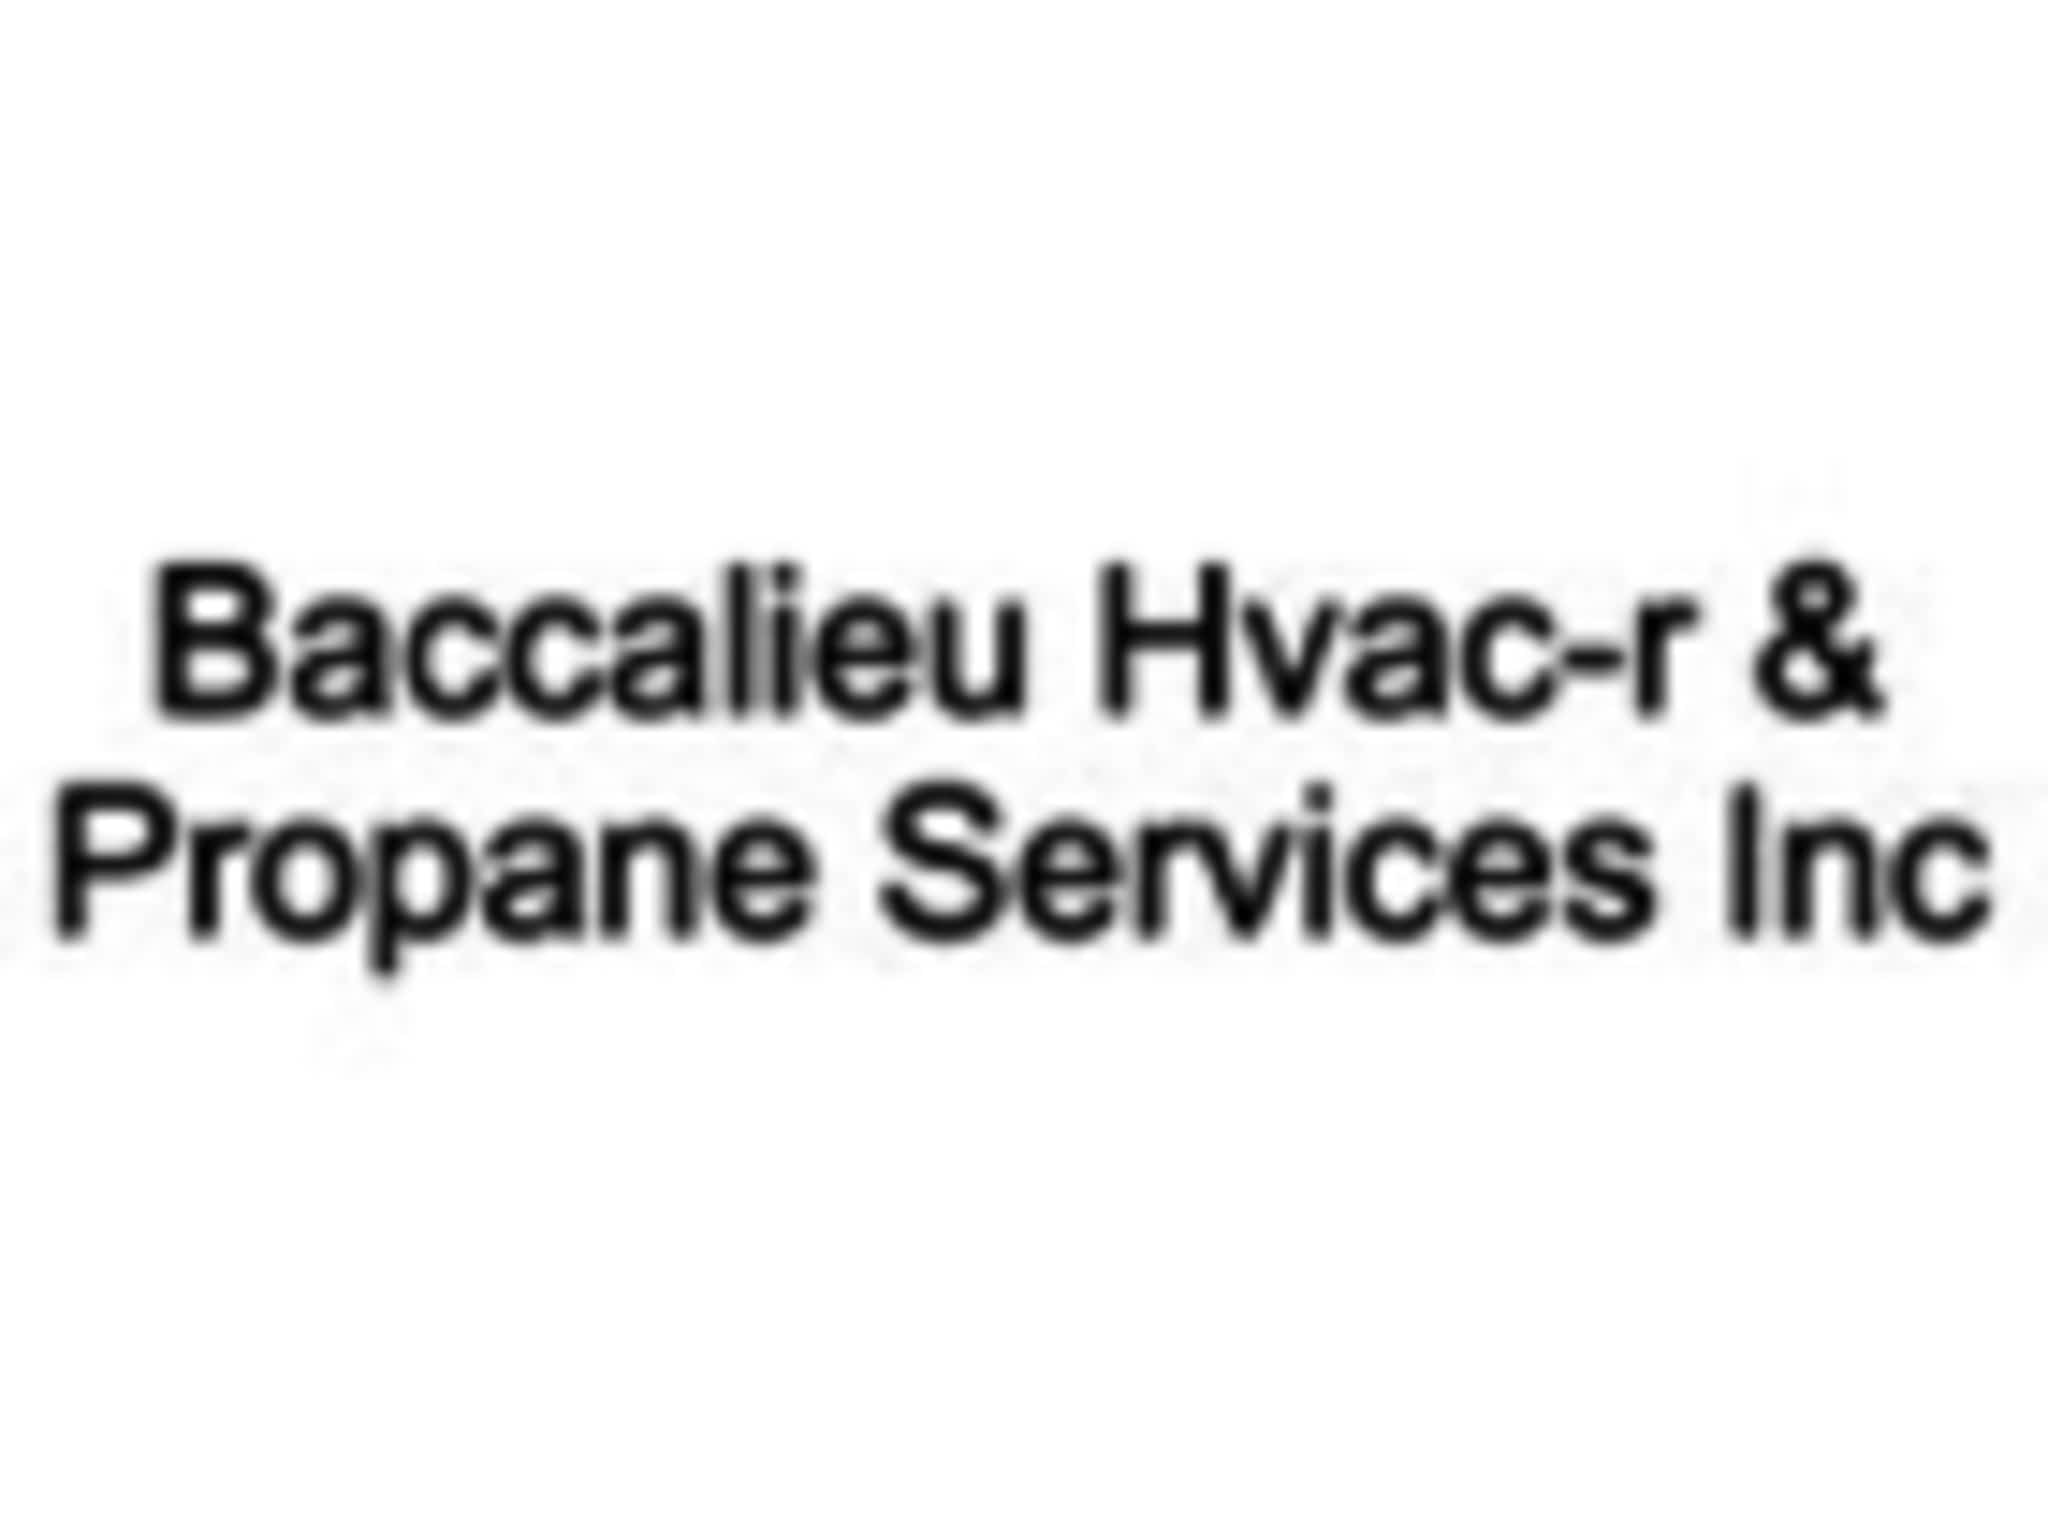 photo Baccalieu Hvac-r & Propane Services Inc